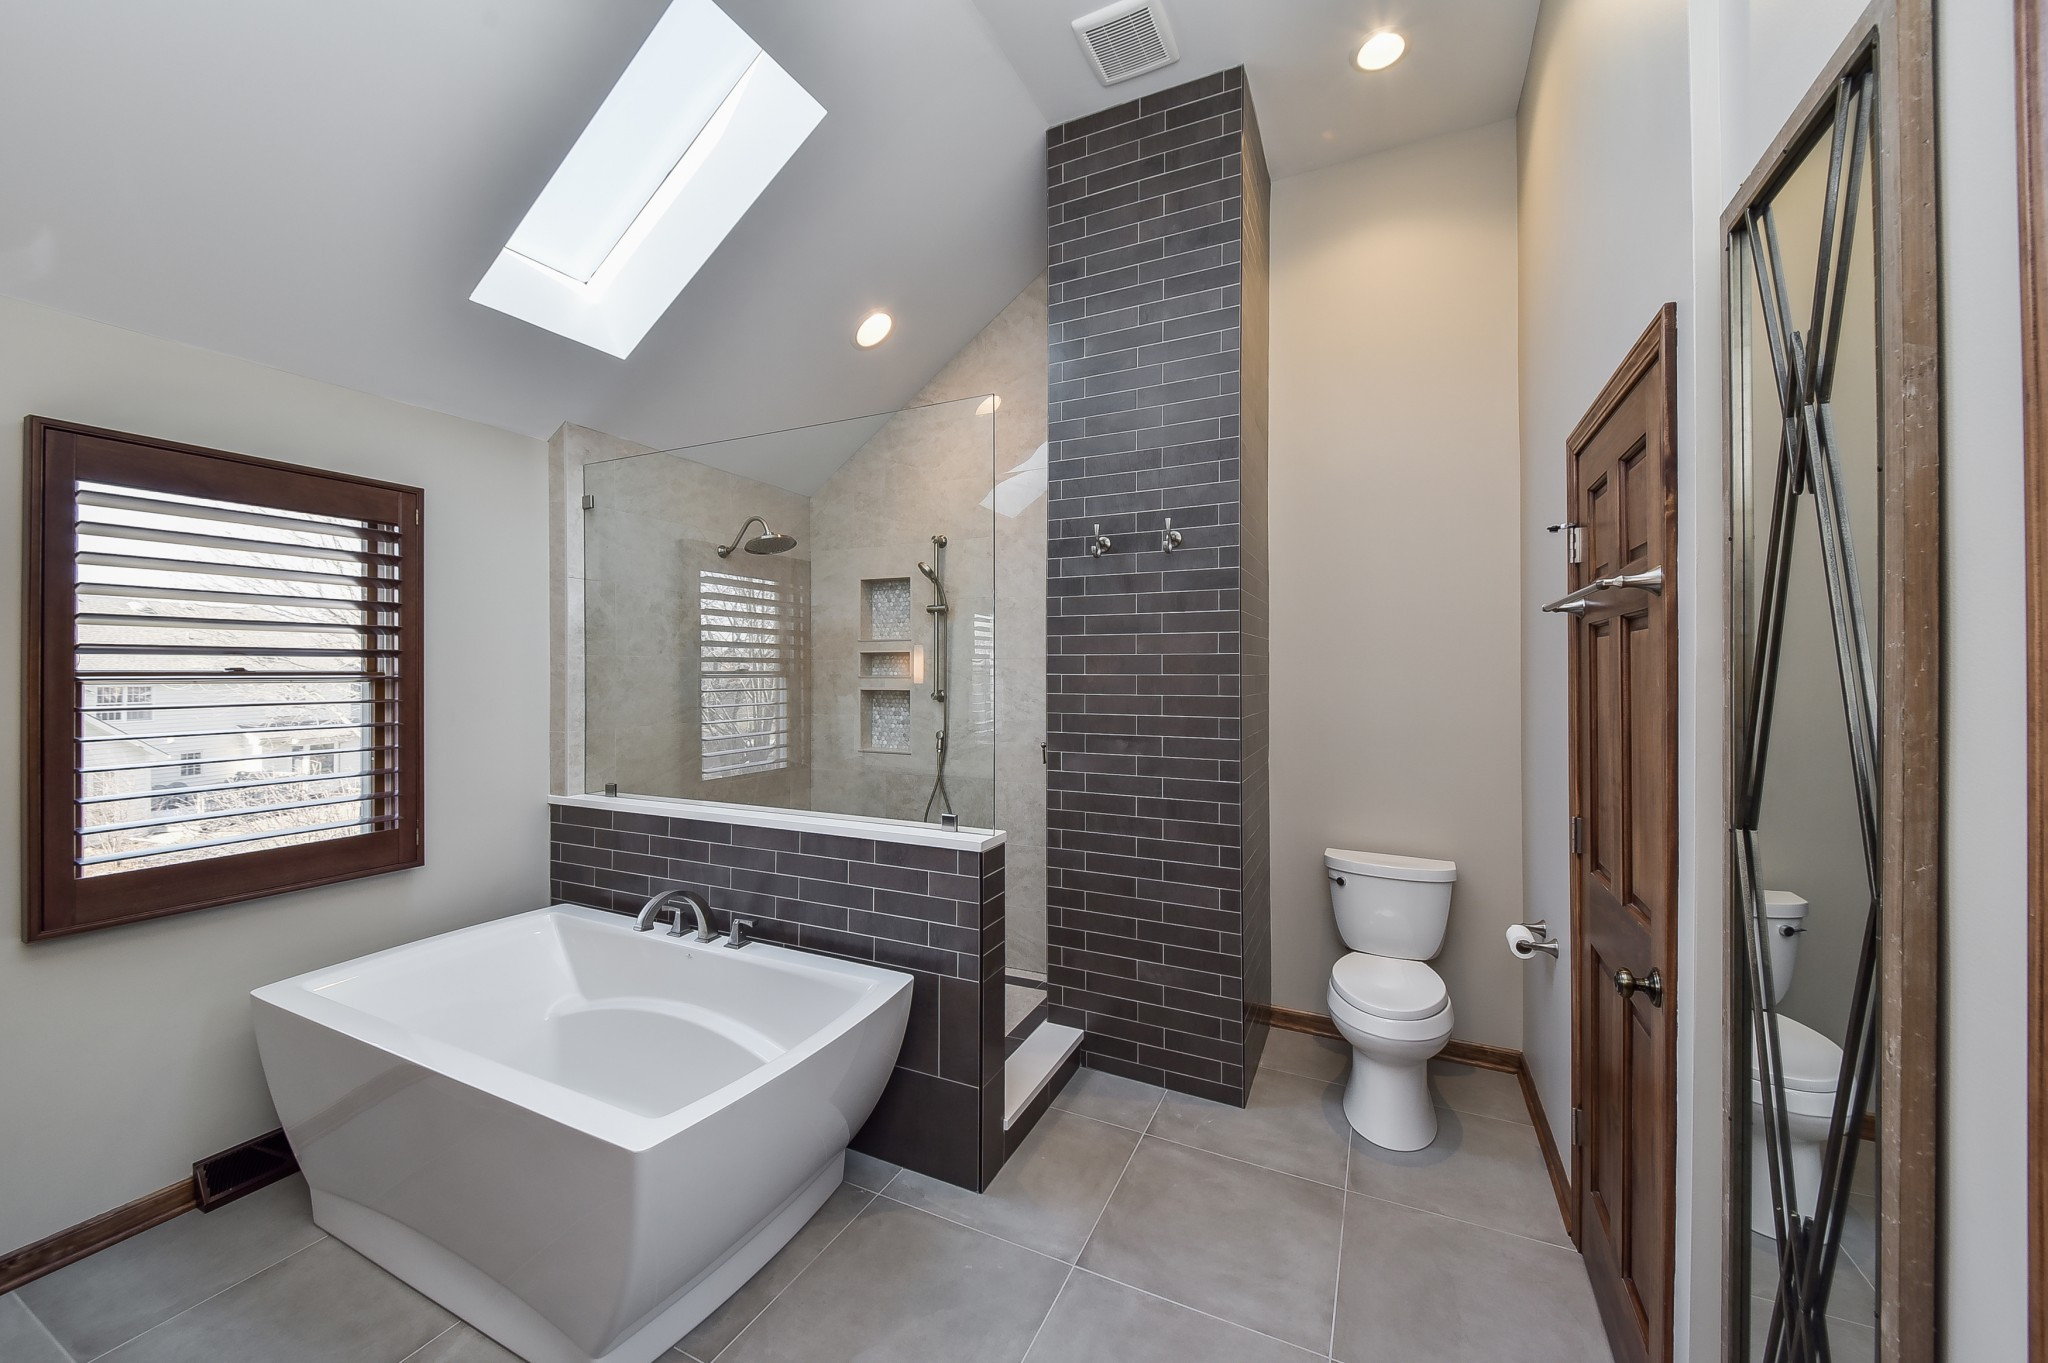 Bathroom Remodel Ideas 2020
 14 Bathroom Design Trends For 2020